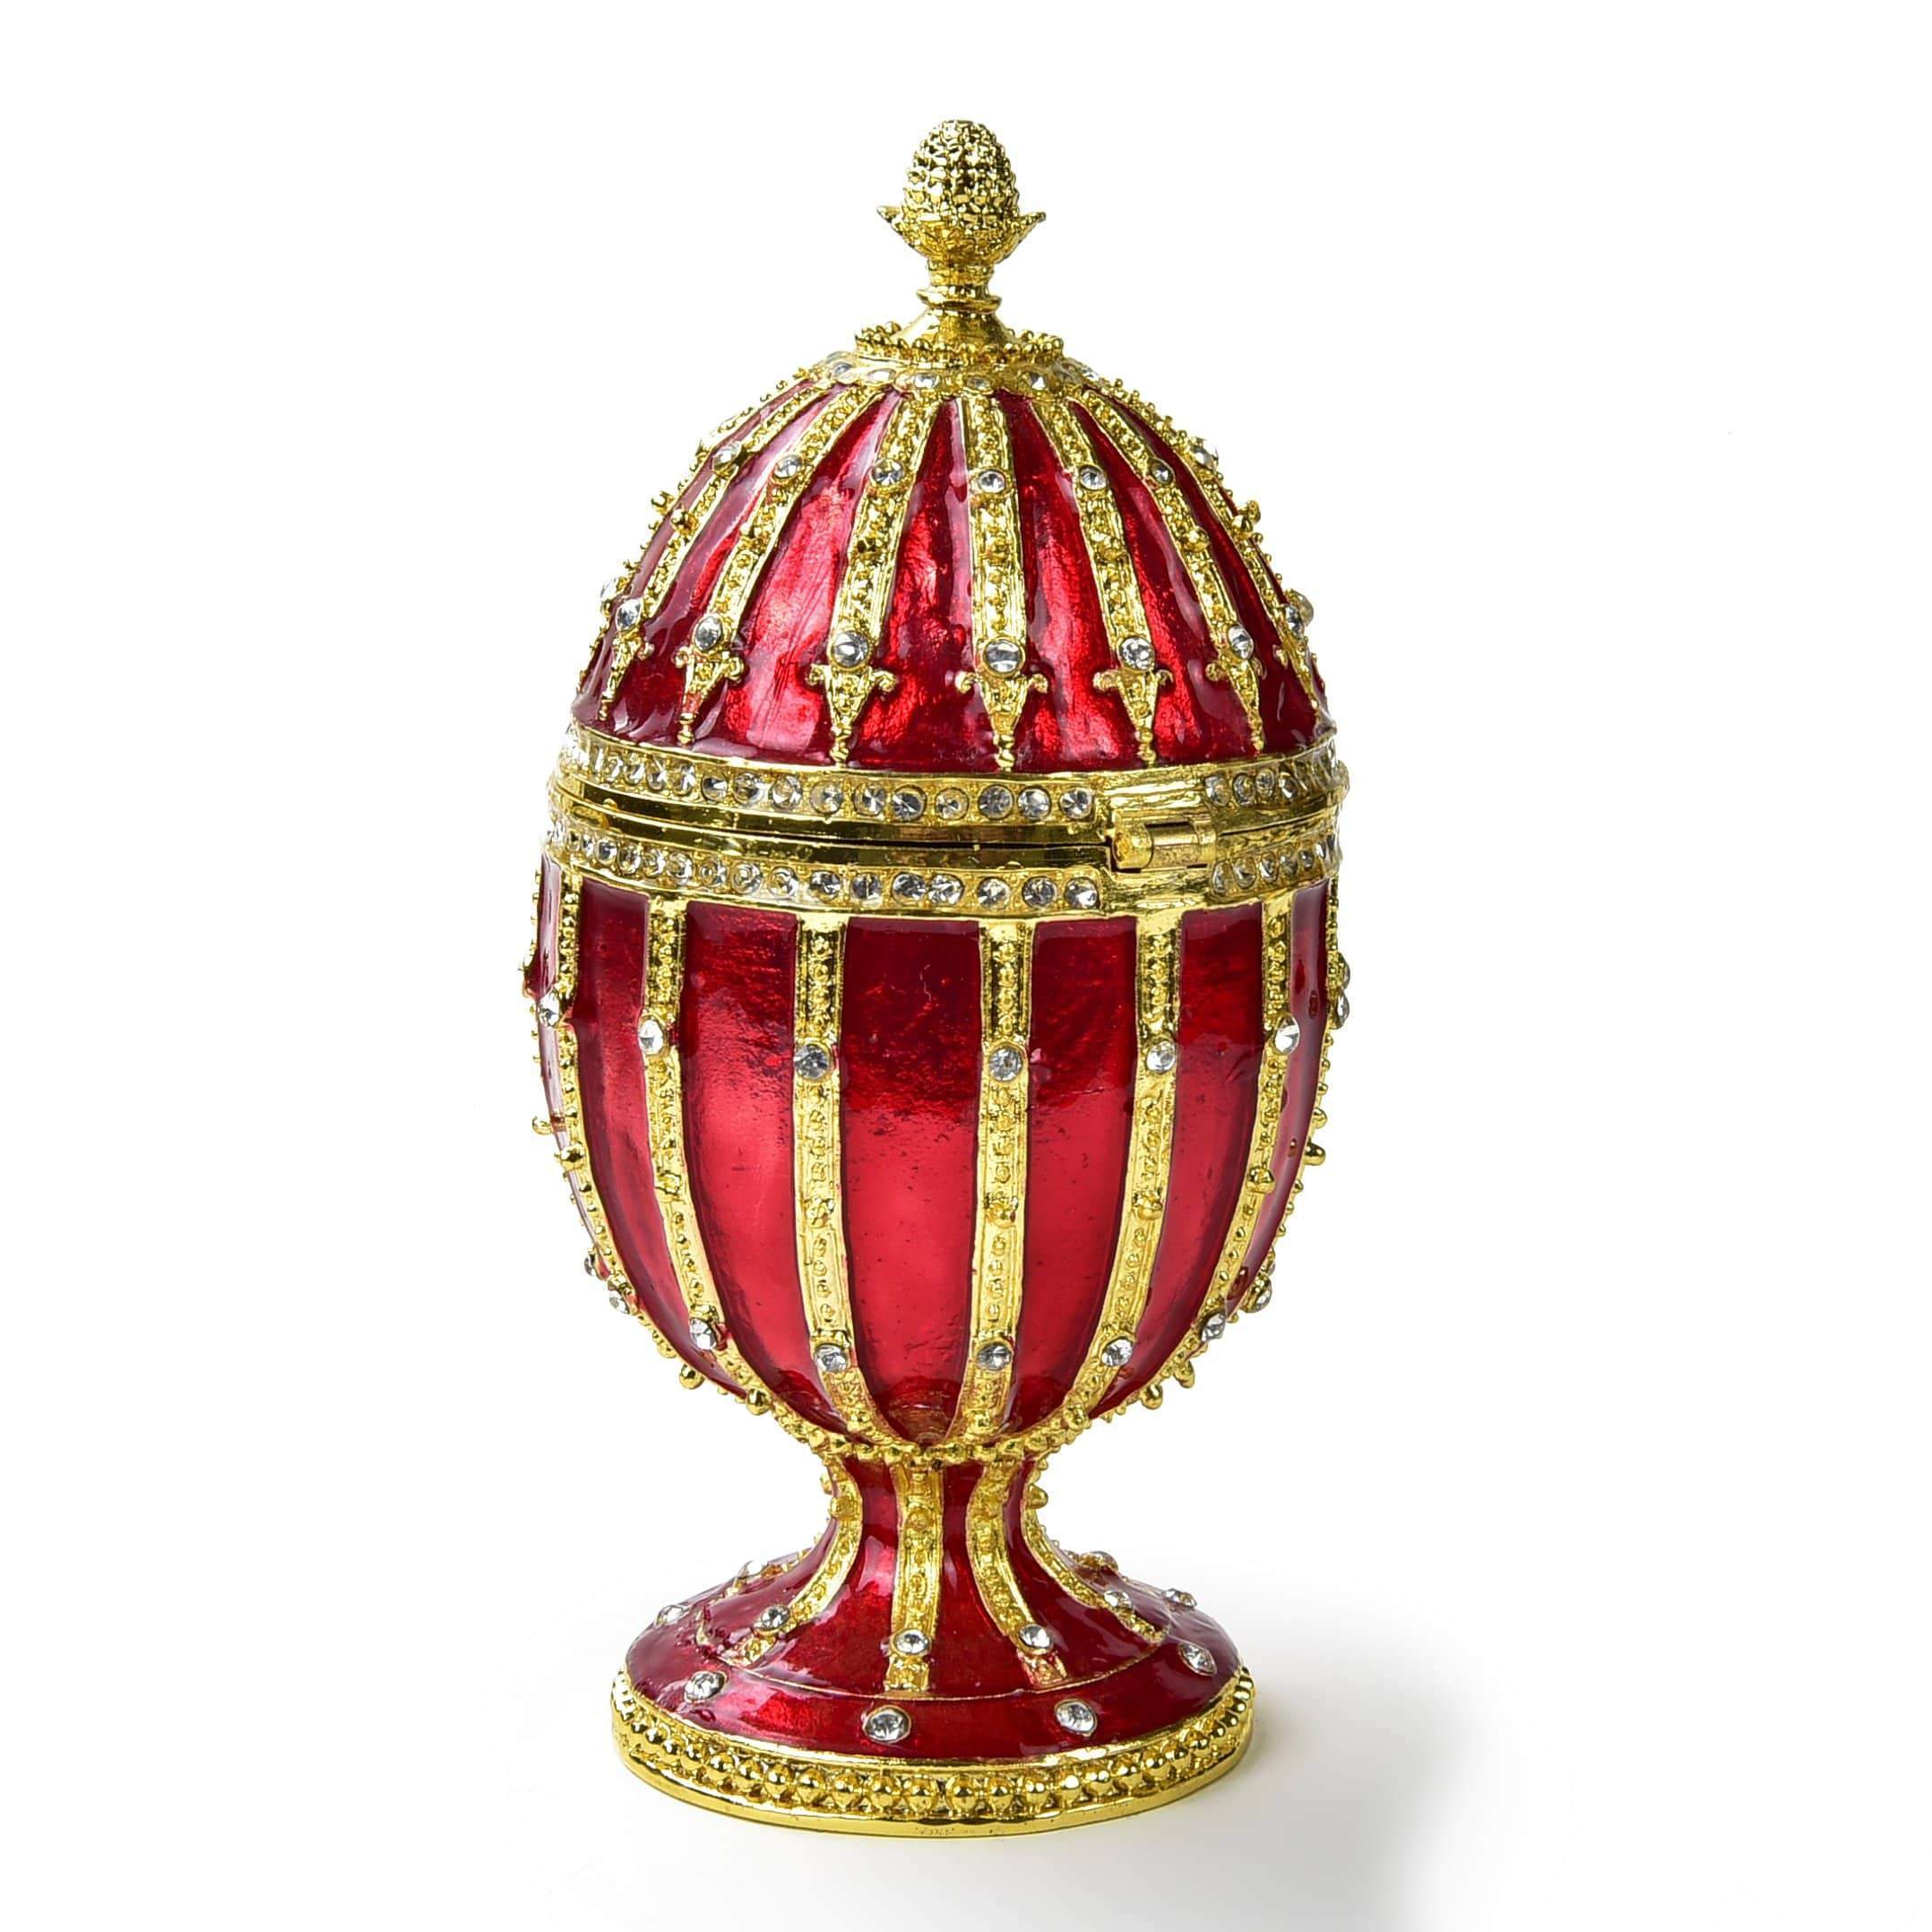 Kalifano Vanity Figurine Red Faberge Egg Figurine Keepsake Musical Box made with Crystals SVA-089